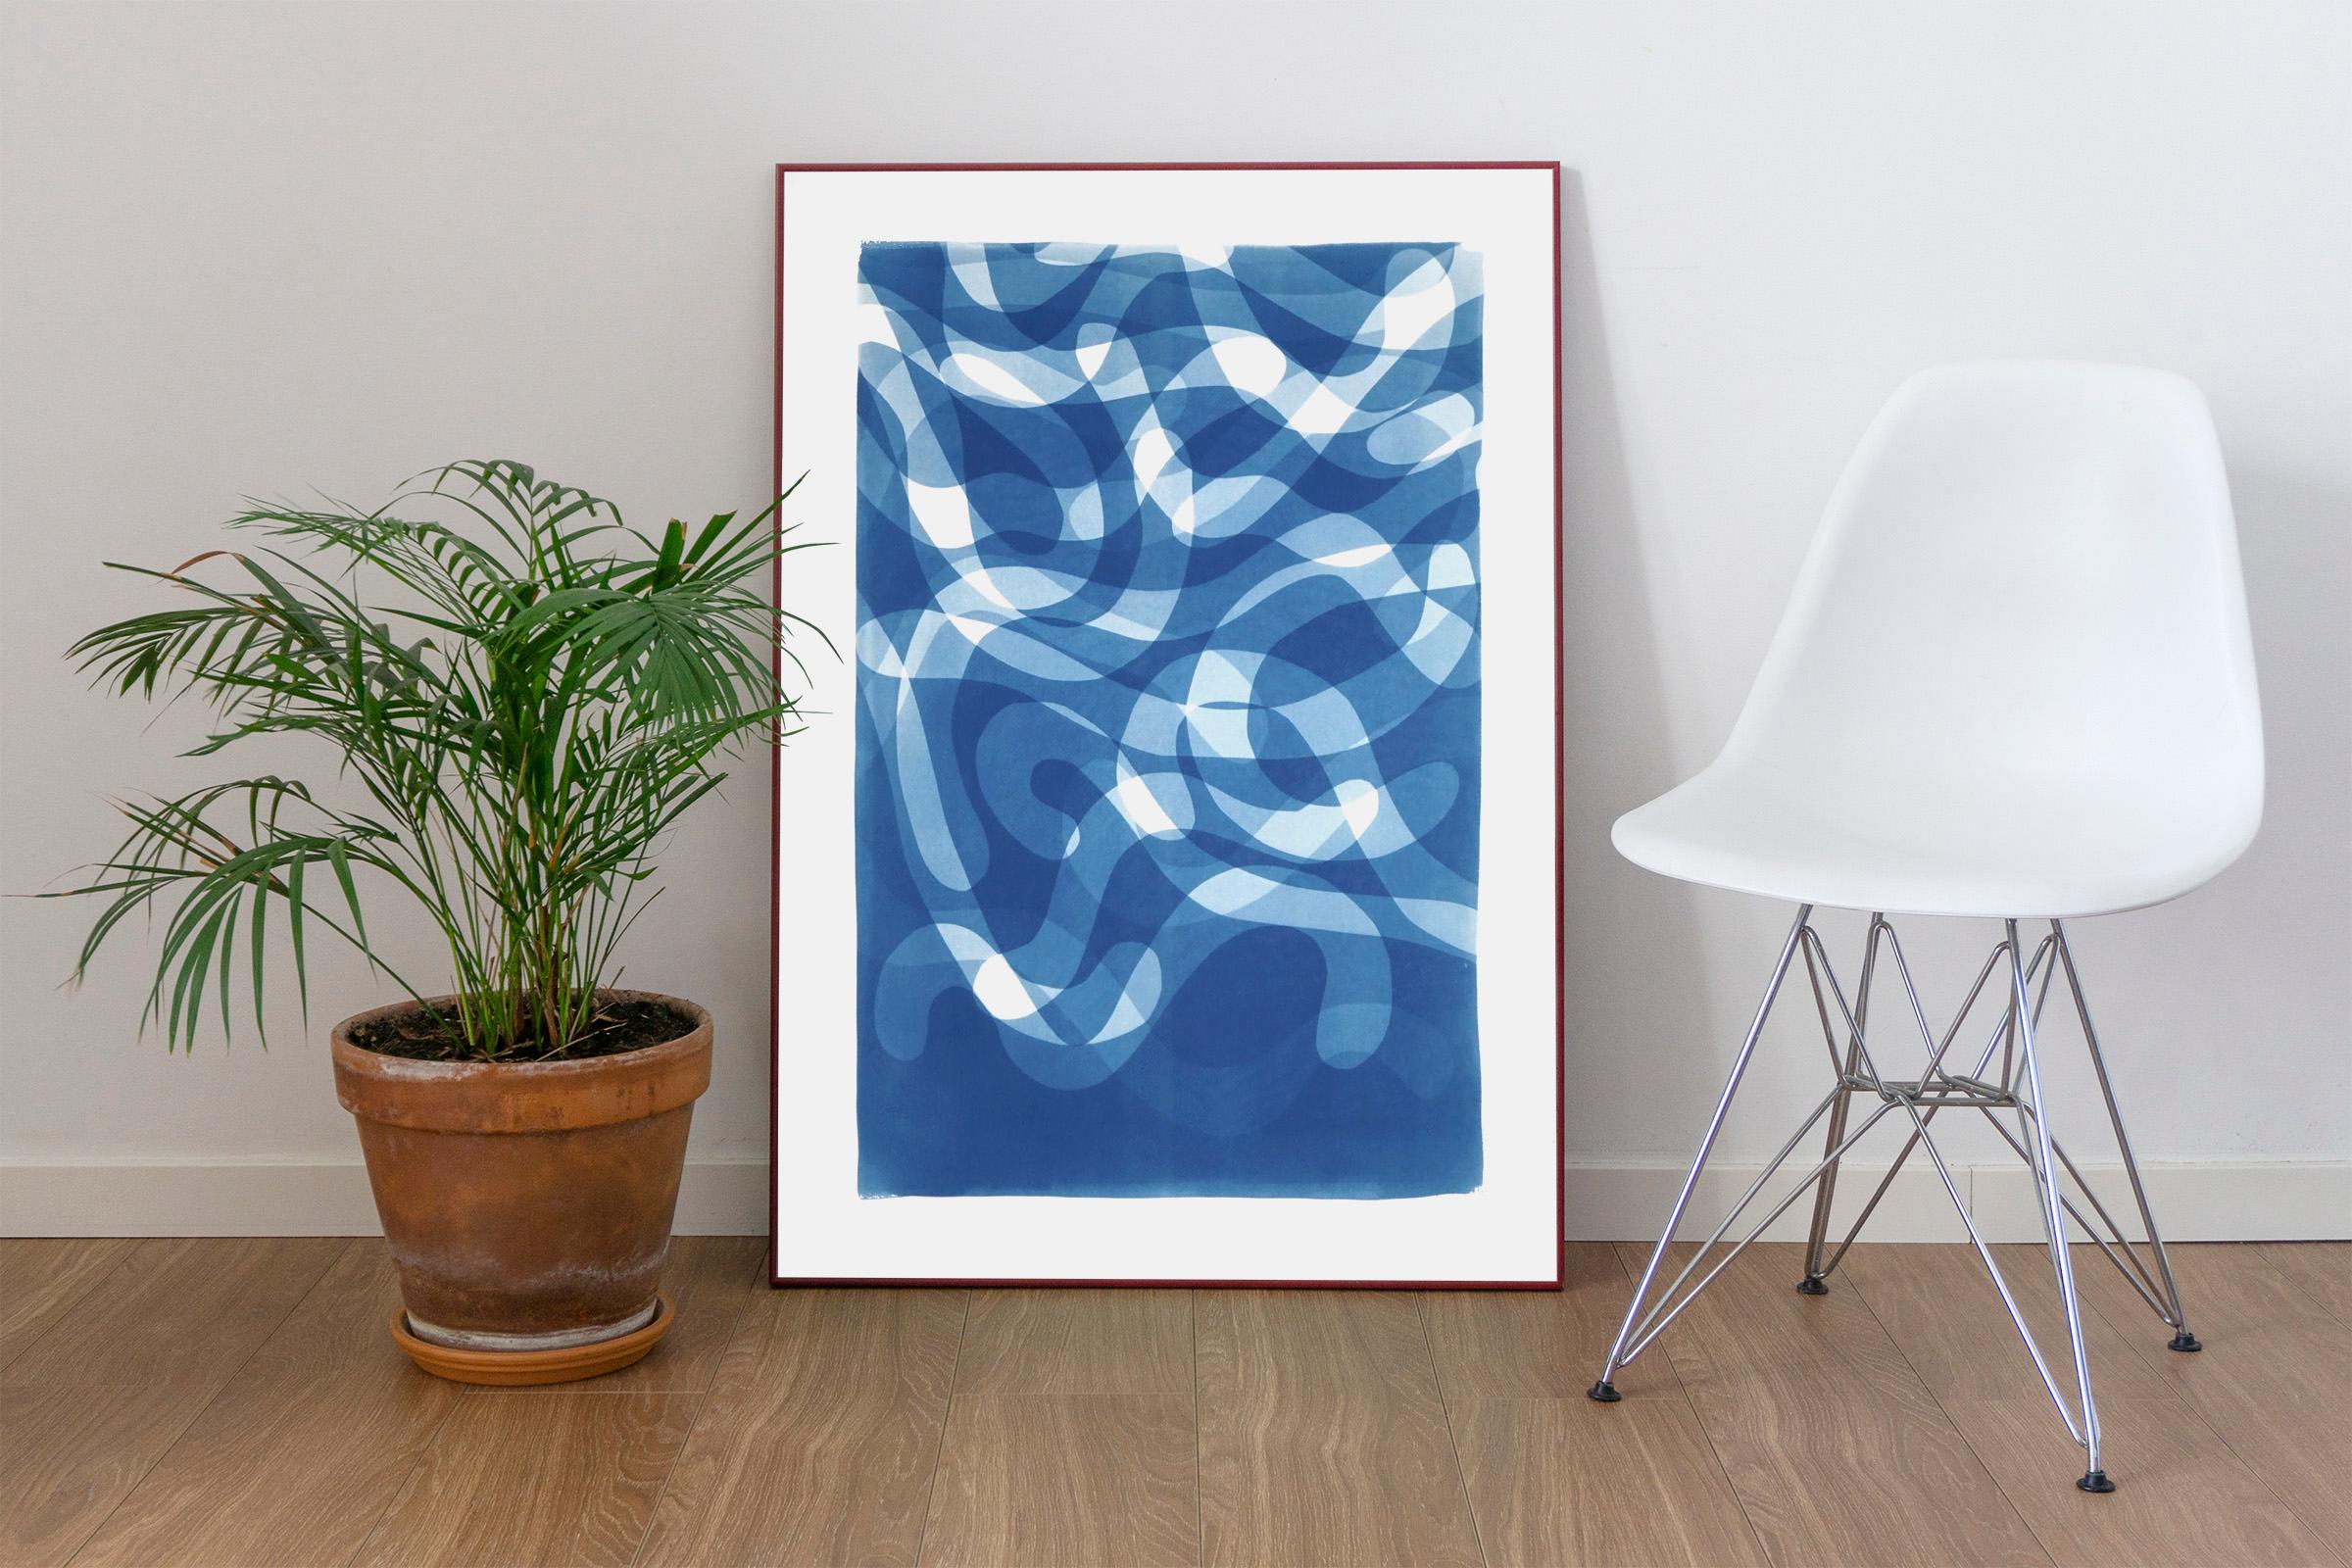 Falling Swirls, Organic Curvy Layers in Blue Tones, Handmade Cyanotype on Paper - Photograph by Kind of Cyan